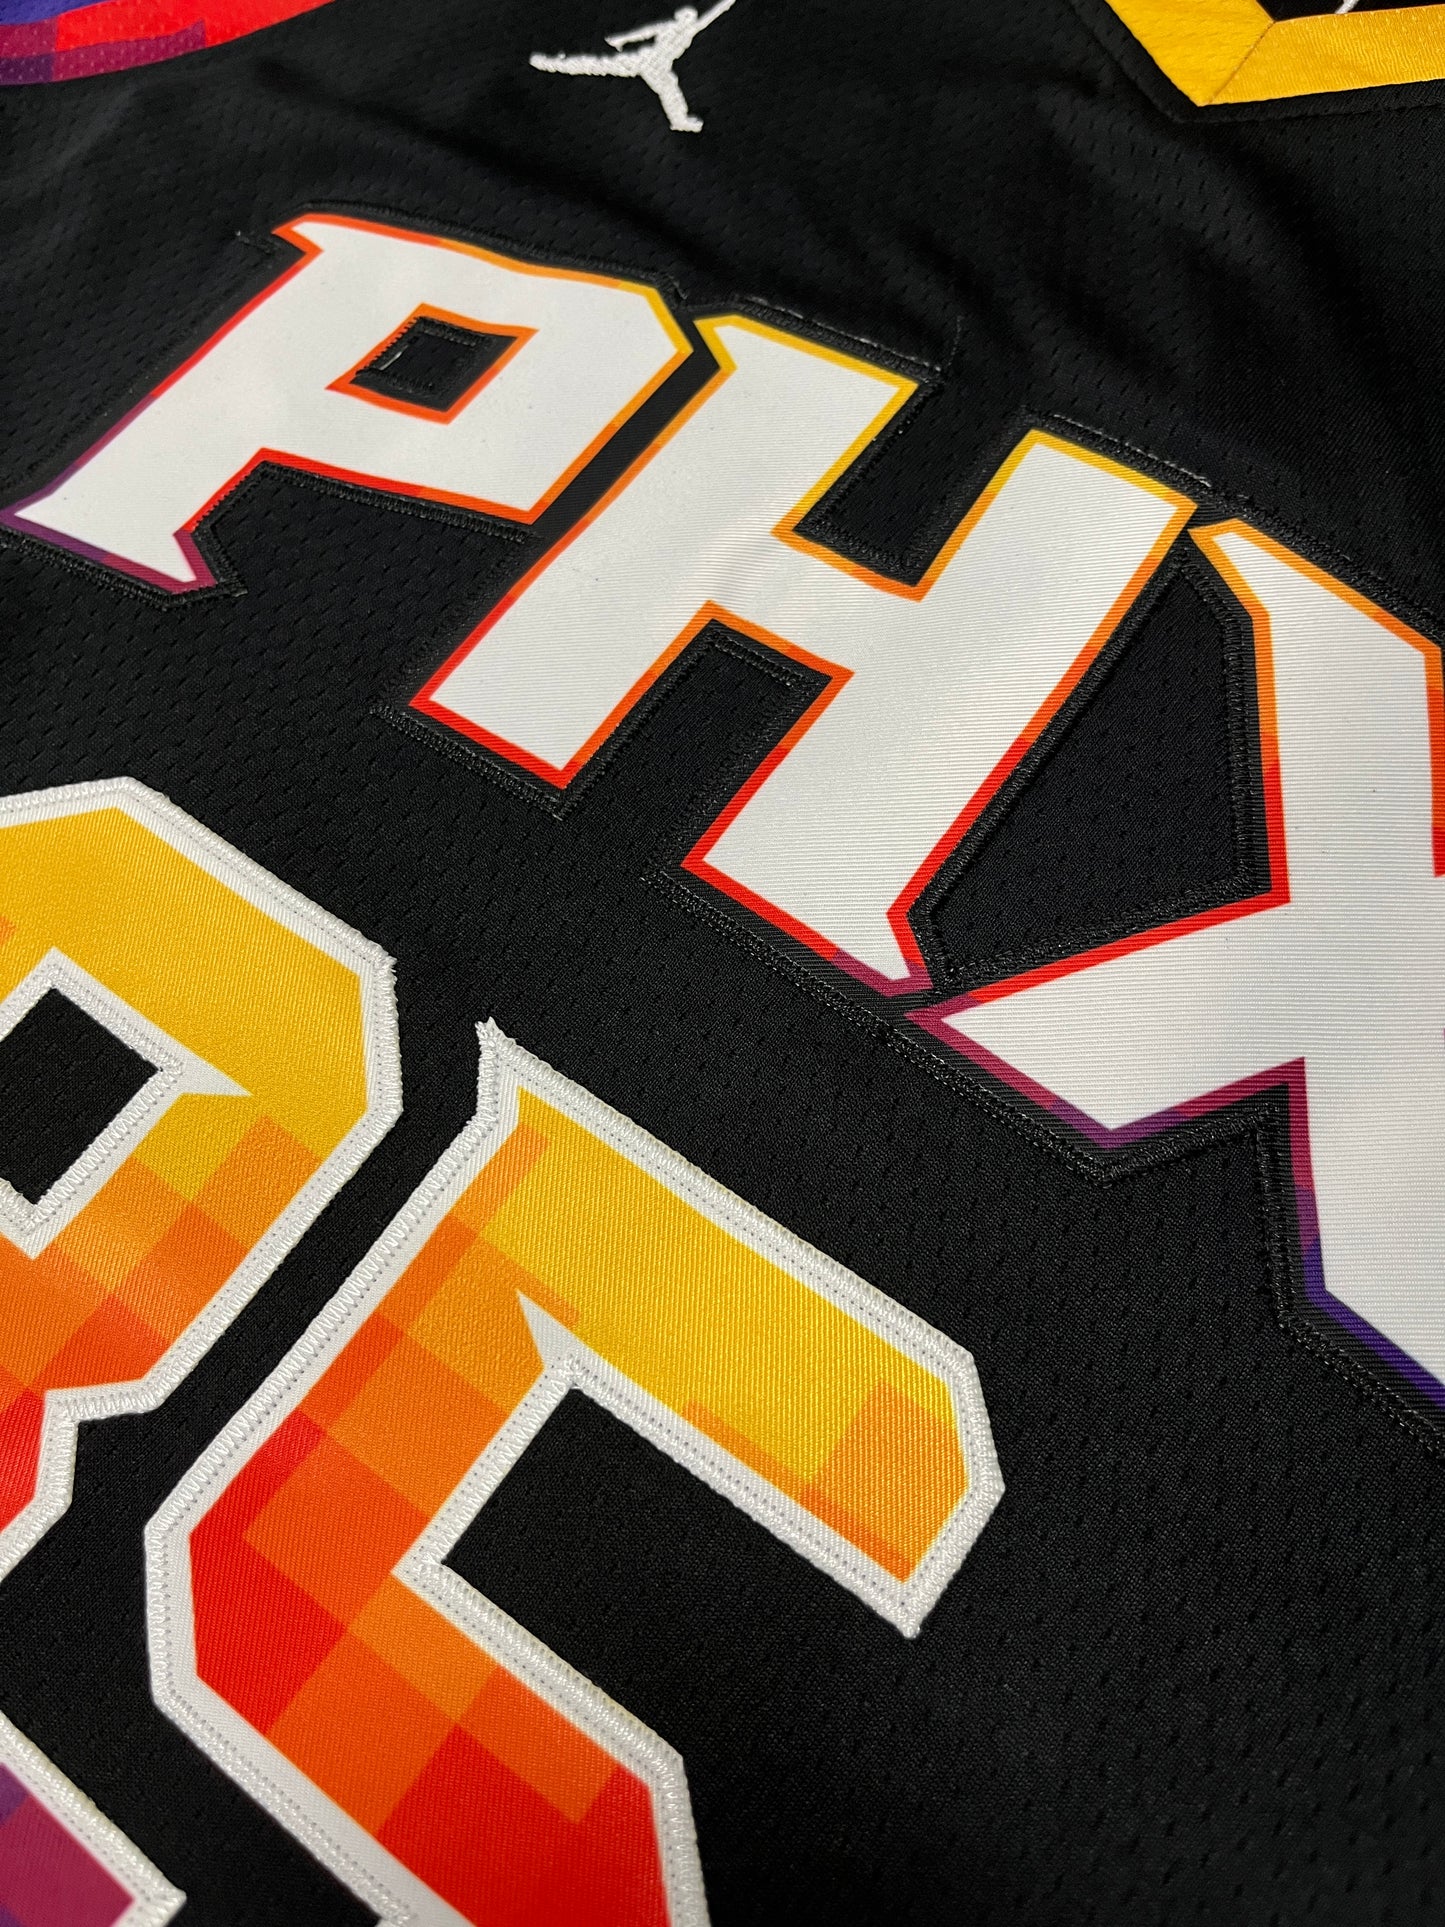 DURANT 35 Black Phoenix Suns NBA Jersey